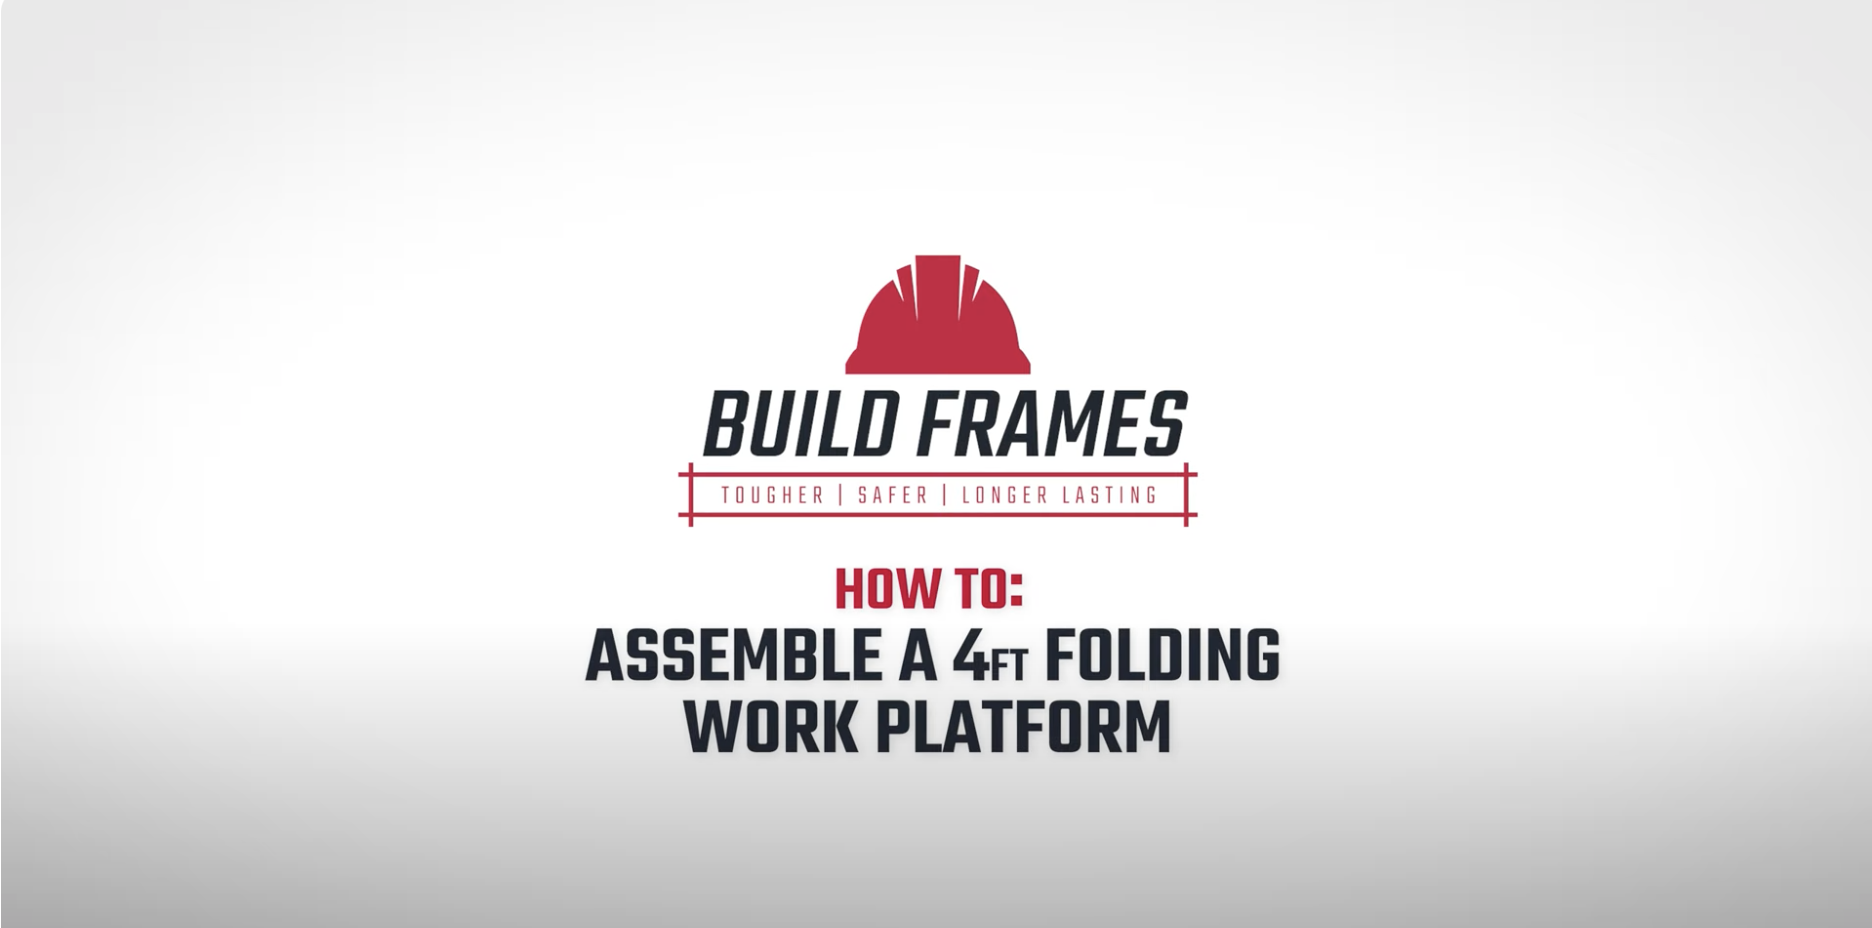 4ft Folding Work Platform - How to Assemble